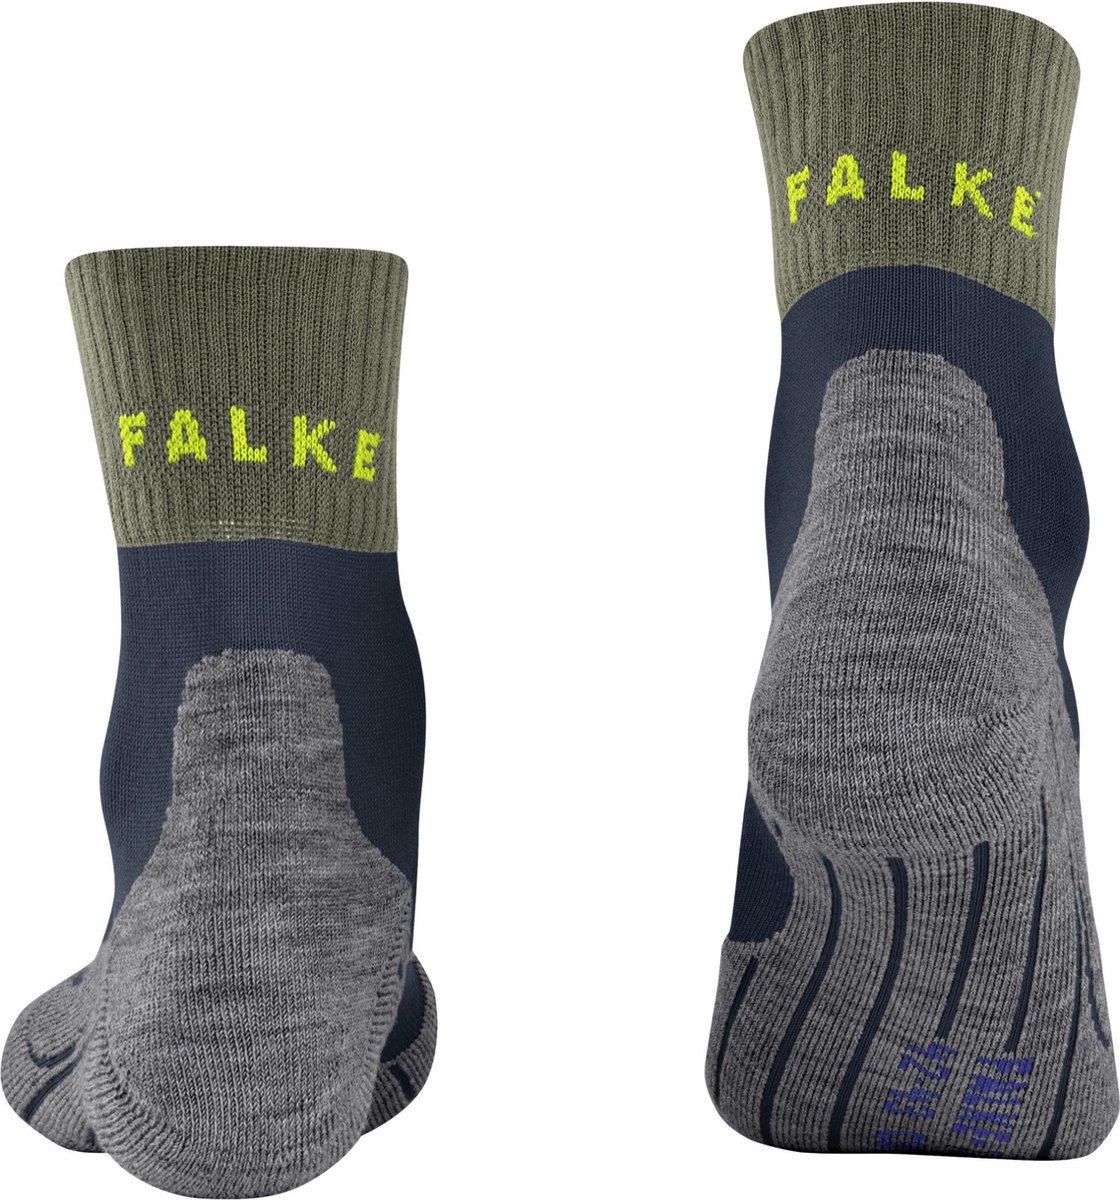 FALKE TK2 Explore Cool Short heren trekking sokken kort - blauw (space blue) - Maat: 39-41 - FALKE